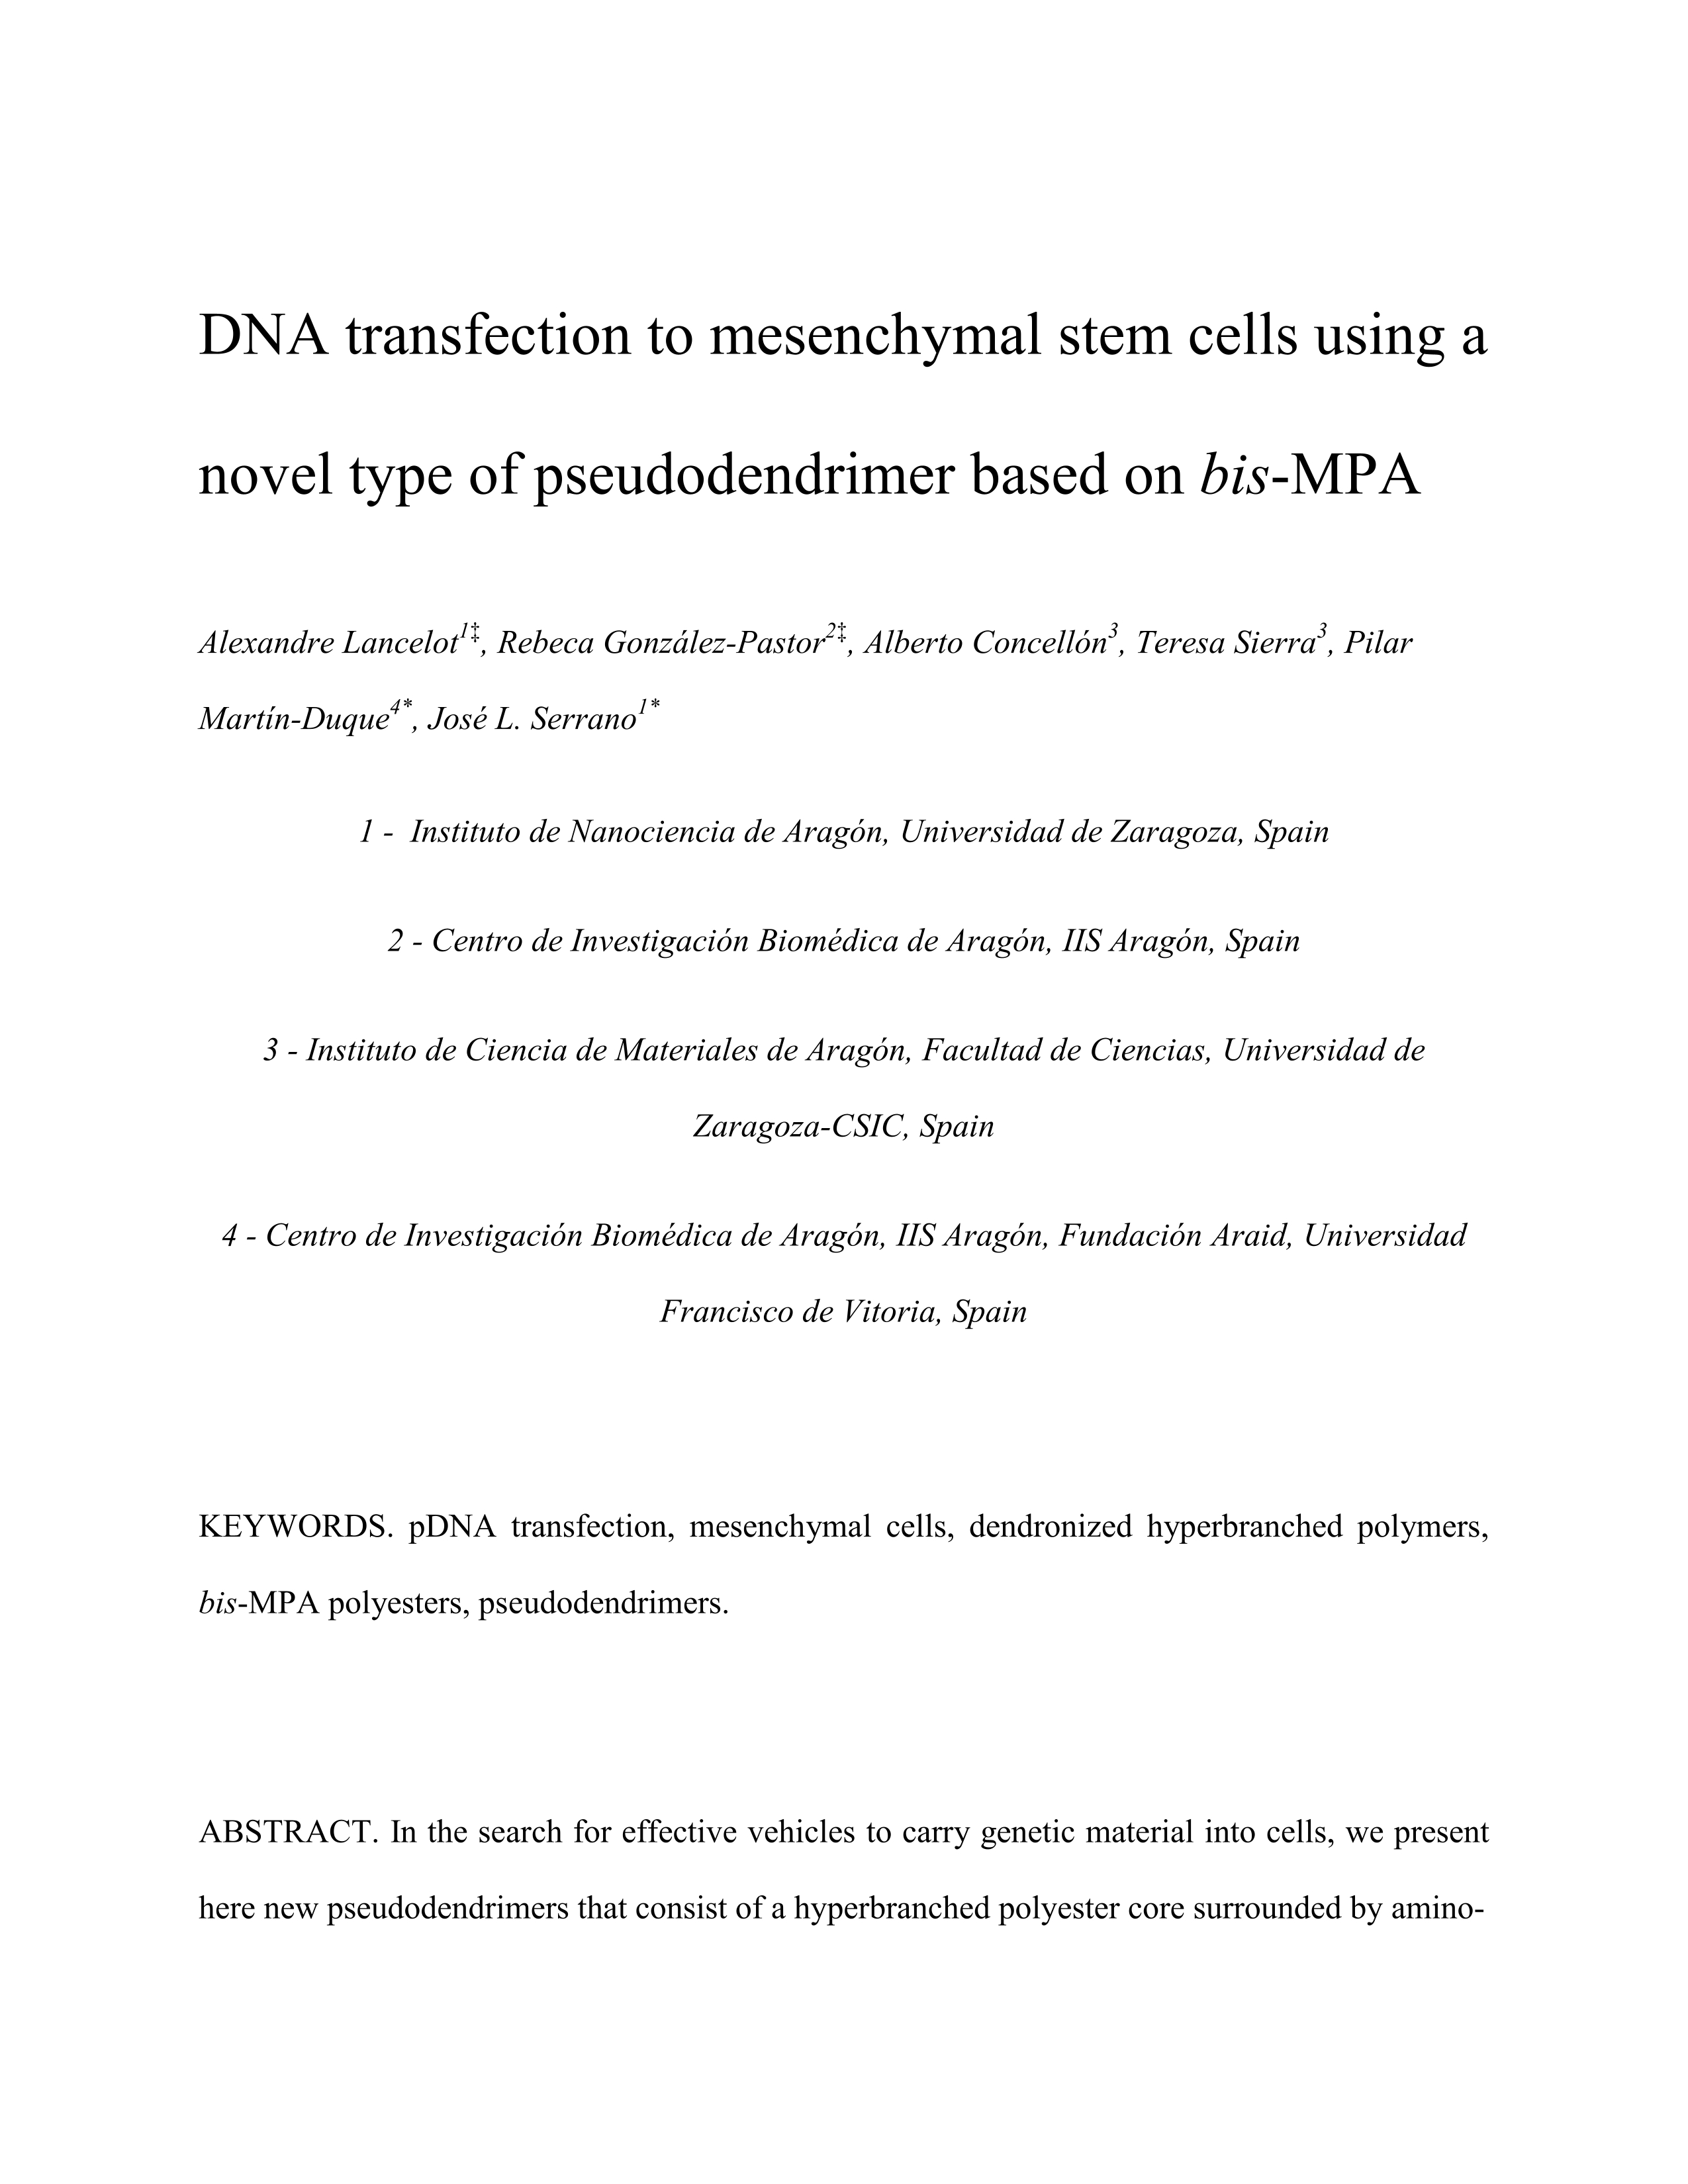 DNA transfection to mesenchymal stem cells using a novel type of pseudodendrimer based on 2,2-bis(hydroxymethyl)propionic acid